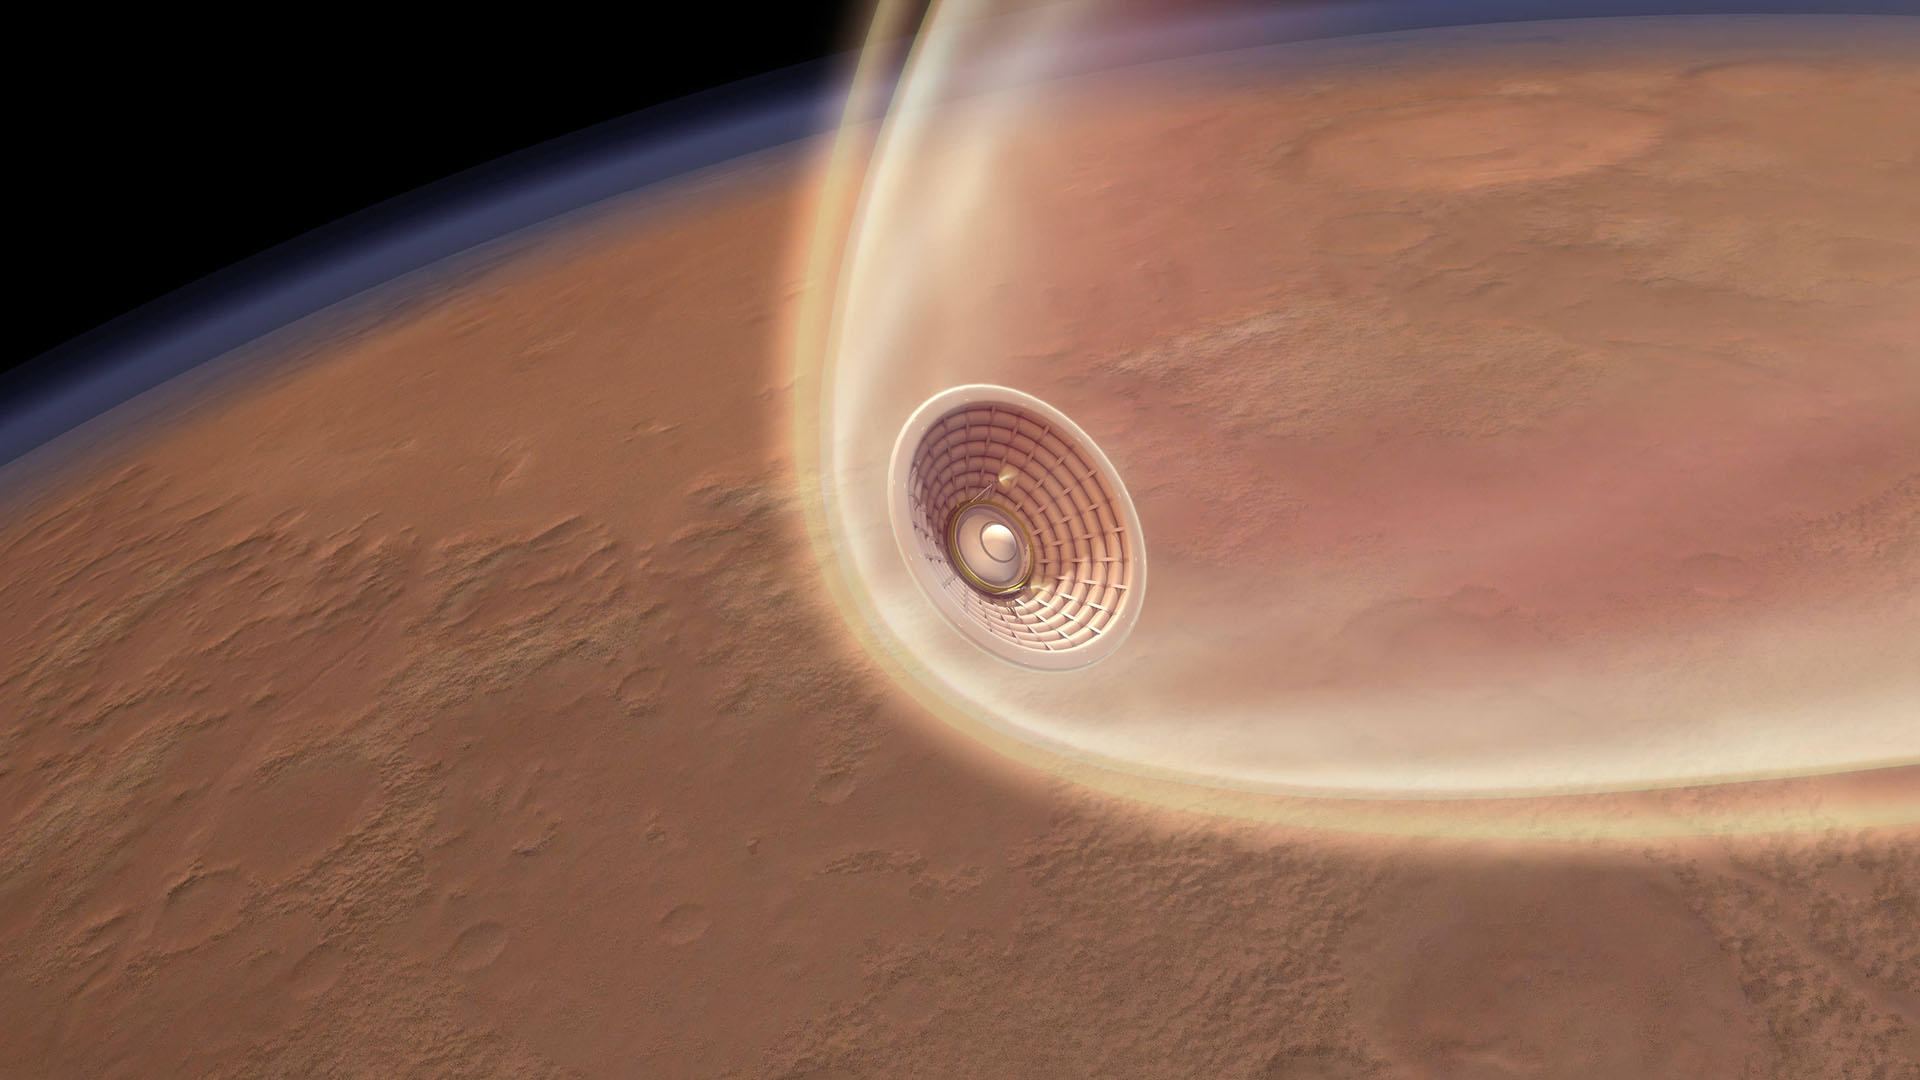 Sticking the Landing on Mars